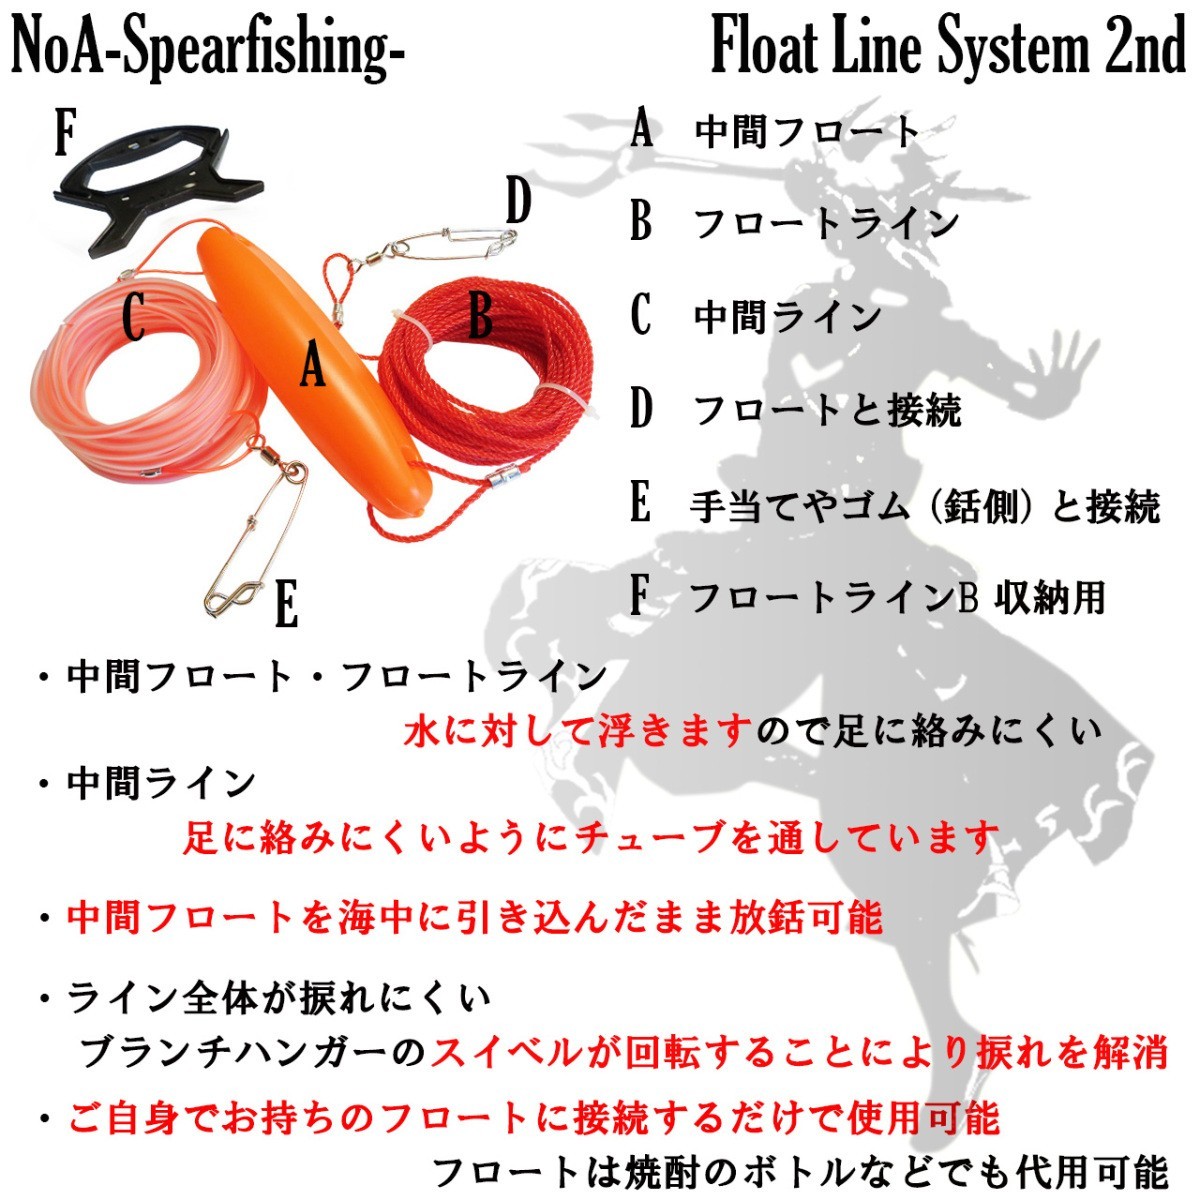 NoA 플로트라인 시스템: 생선 찌르기: 찌르기-머리 찌르기-손-스피어